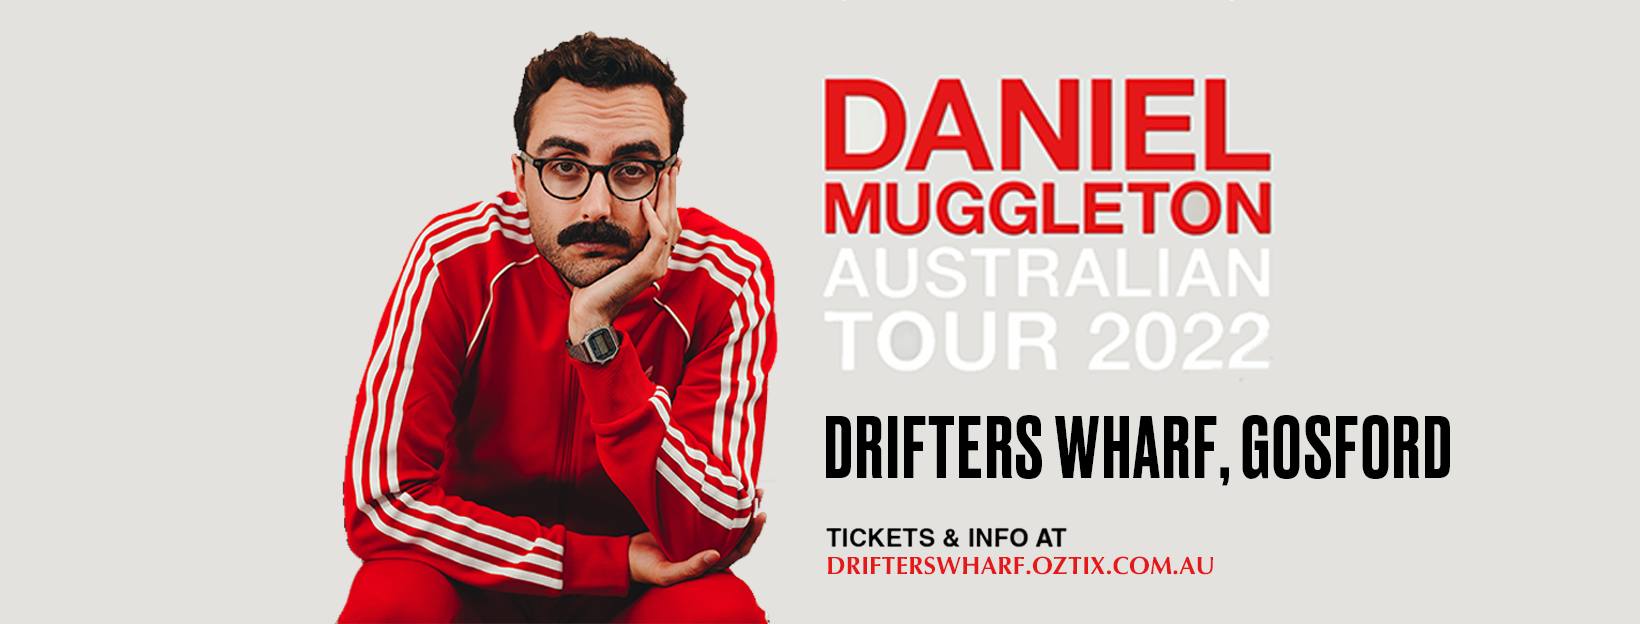 Event Poster for Daniel Muggleton – Australian Tour 2022 @ Drifters Wharf | Gosford | EventsontheHorizon.com